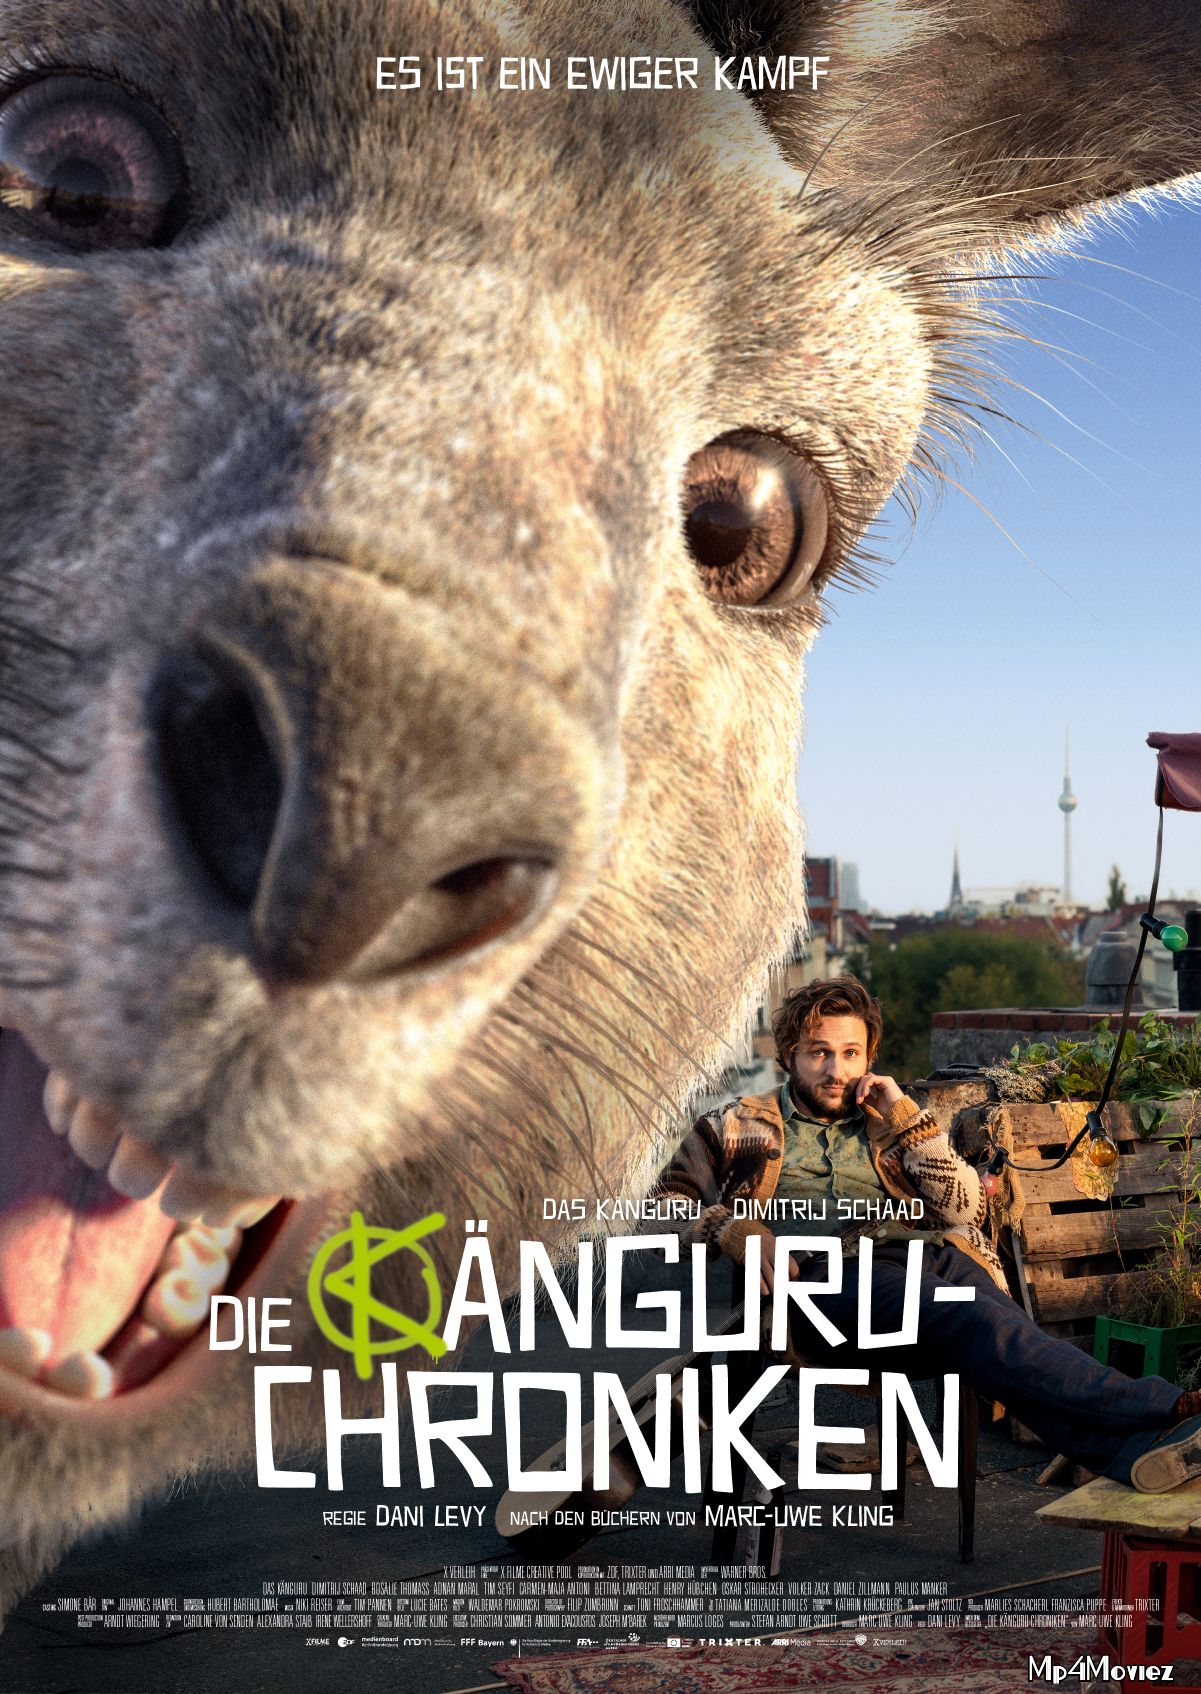 Die Kanguru Chroniken 2020 Hindi Dubbed Full Movie download full movie